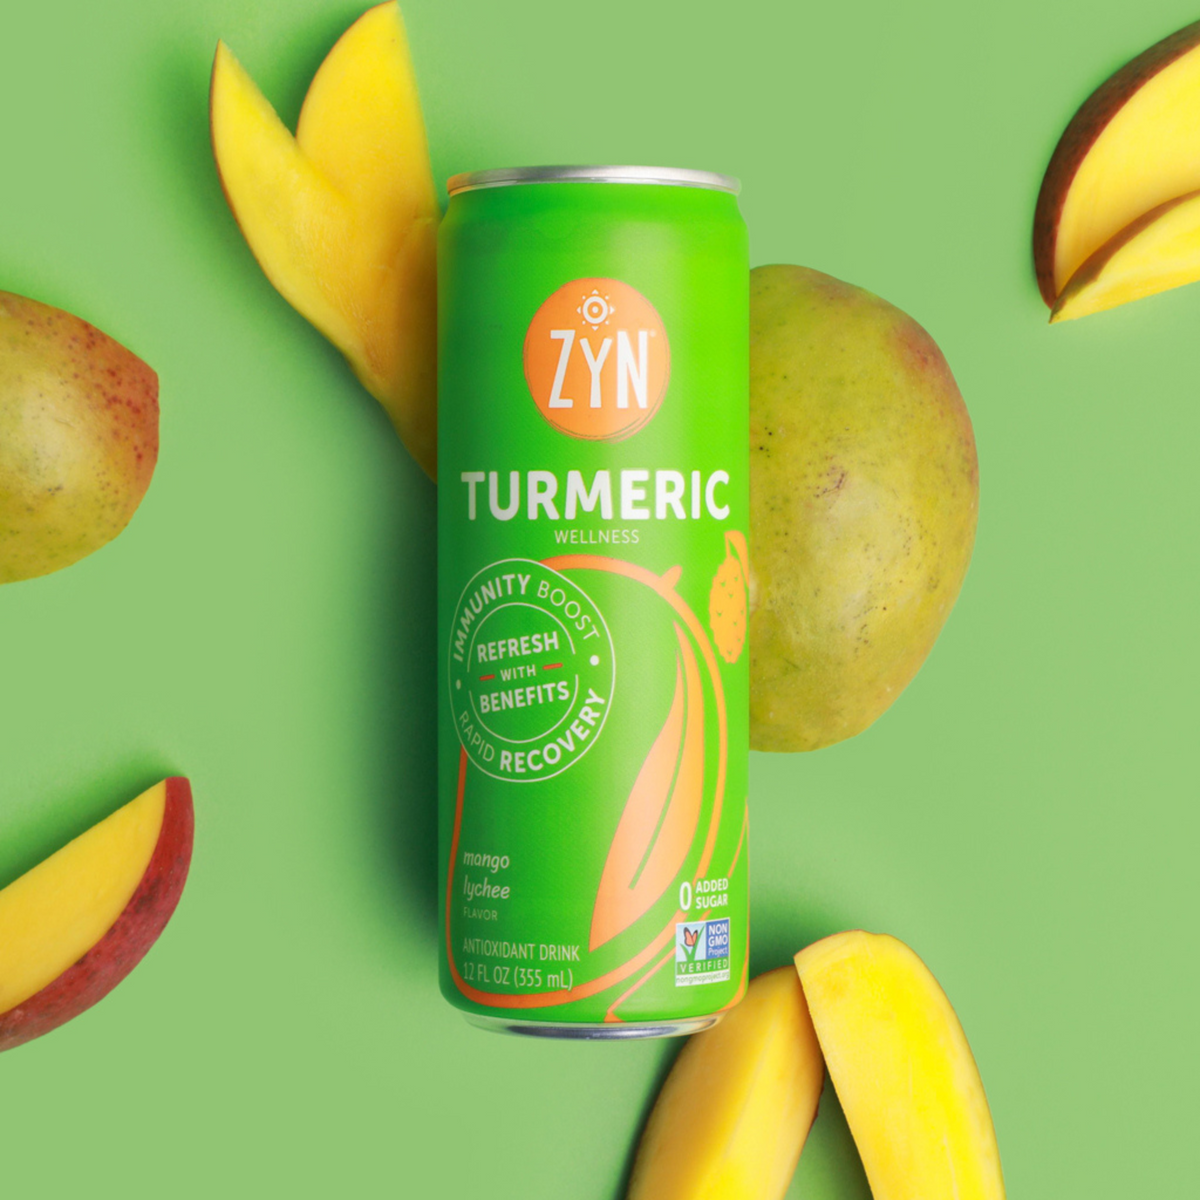 Turmeric Wellness Drink - Variety Sample Pack